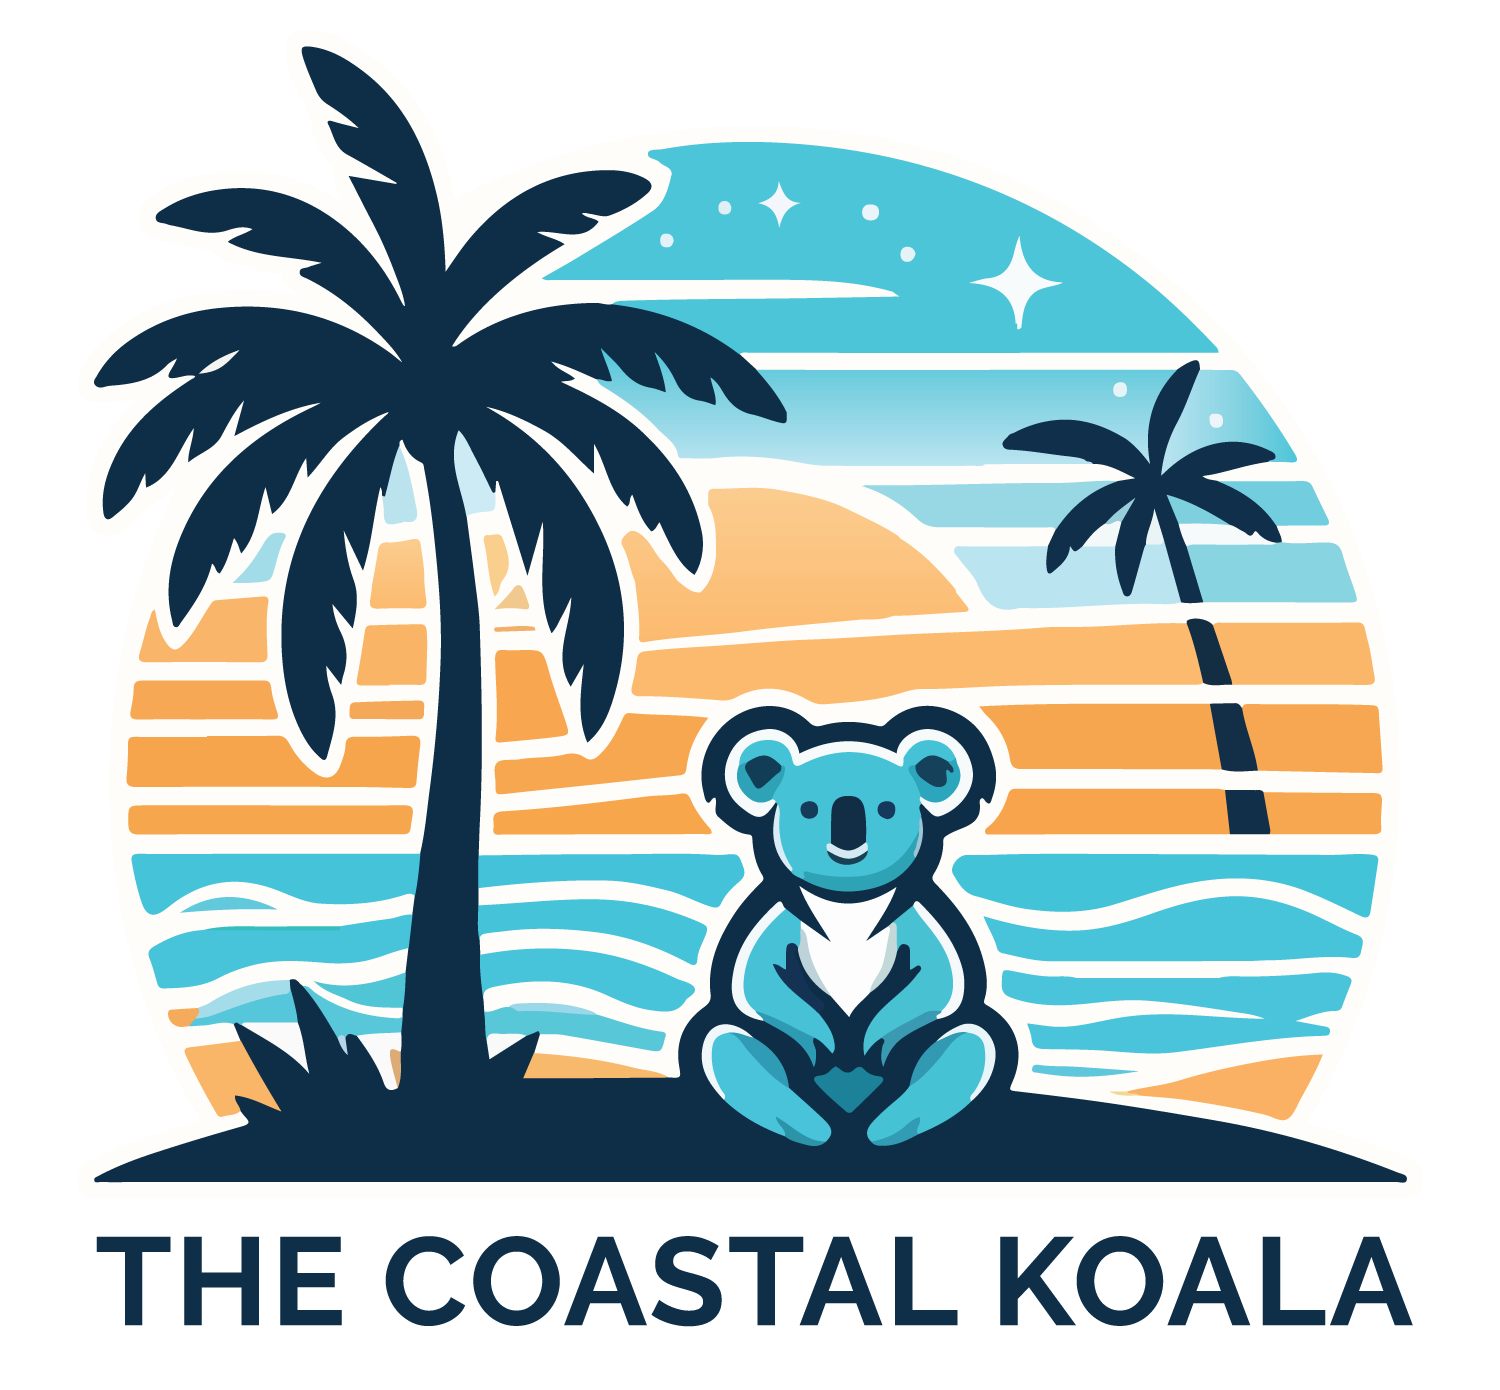 The Coastal Koala logo large version